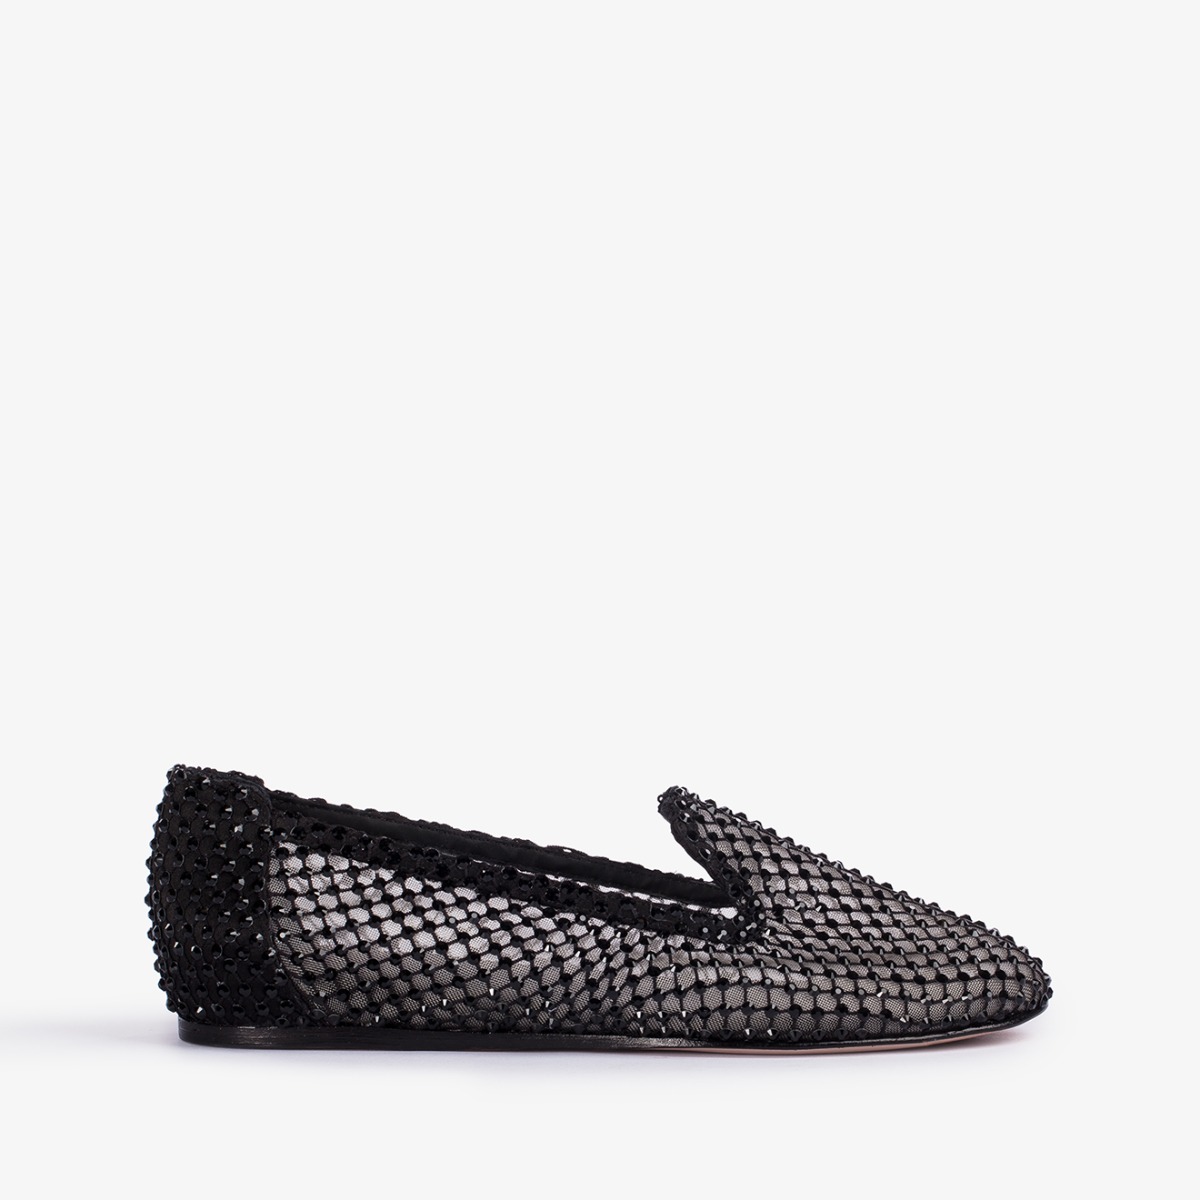 Black fishnet slipper with black Crystals - Le Silla